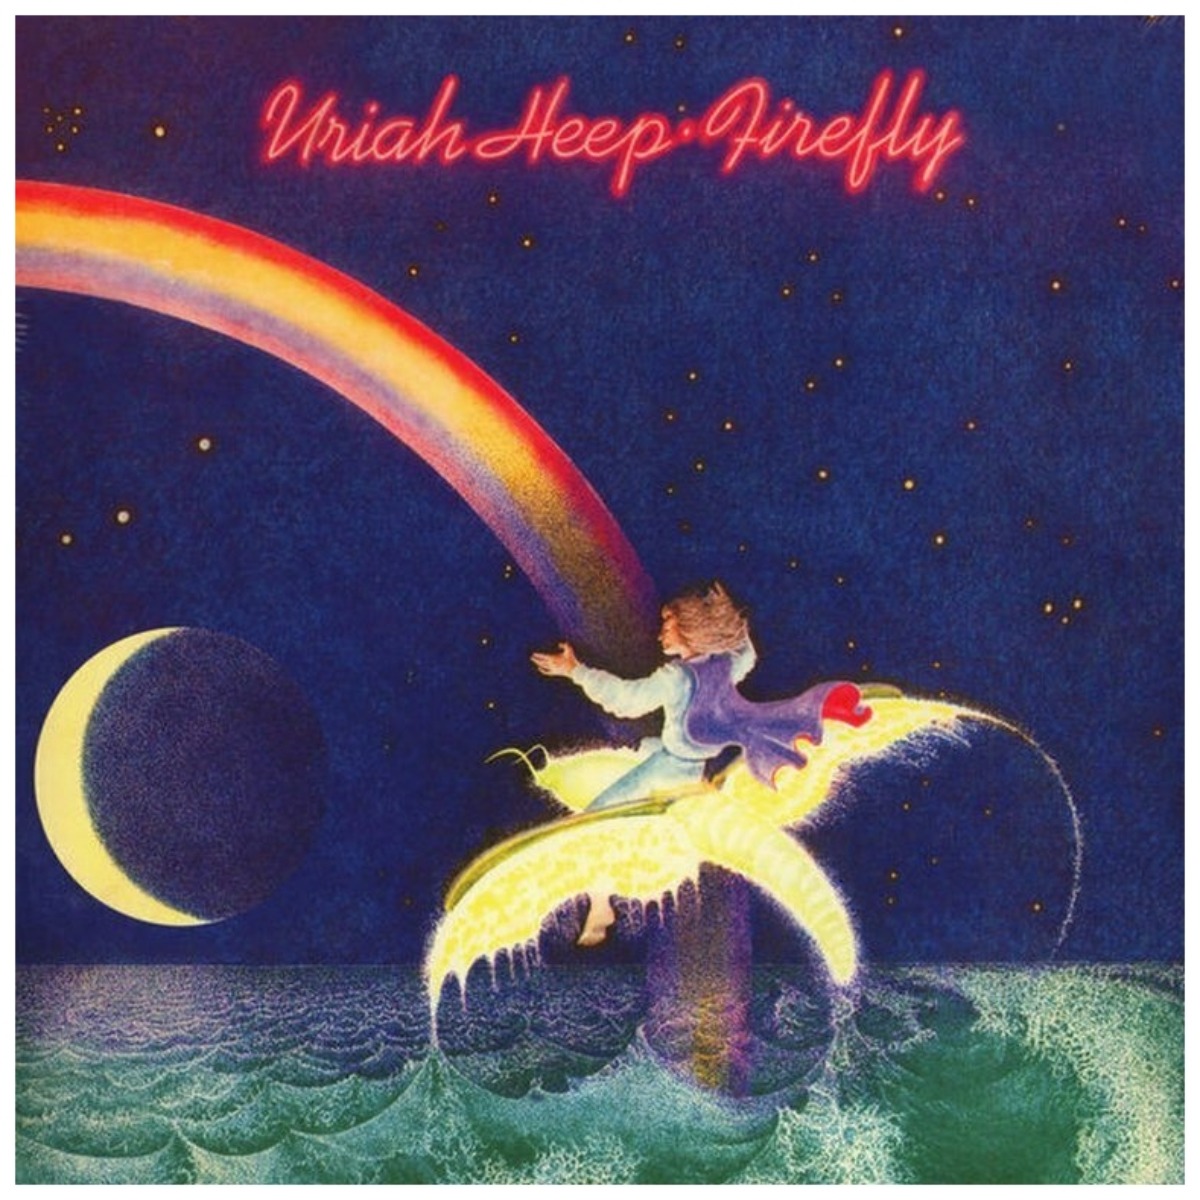 Portada del álbum 'Firefly' de Uriah Heep